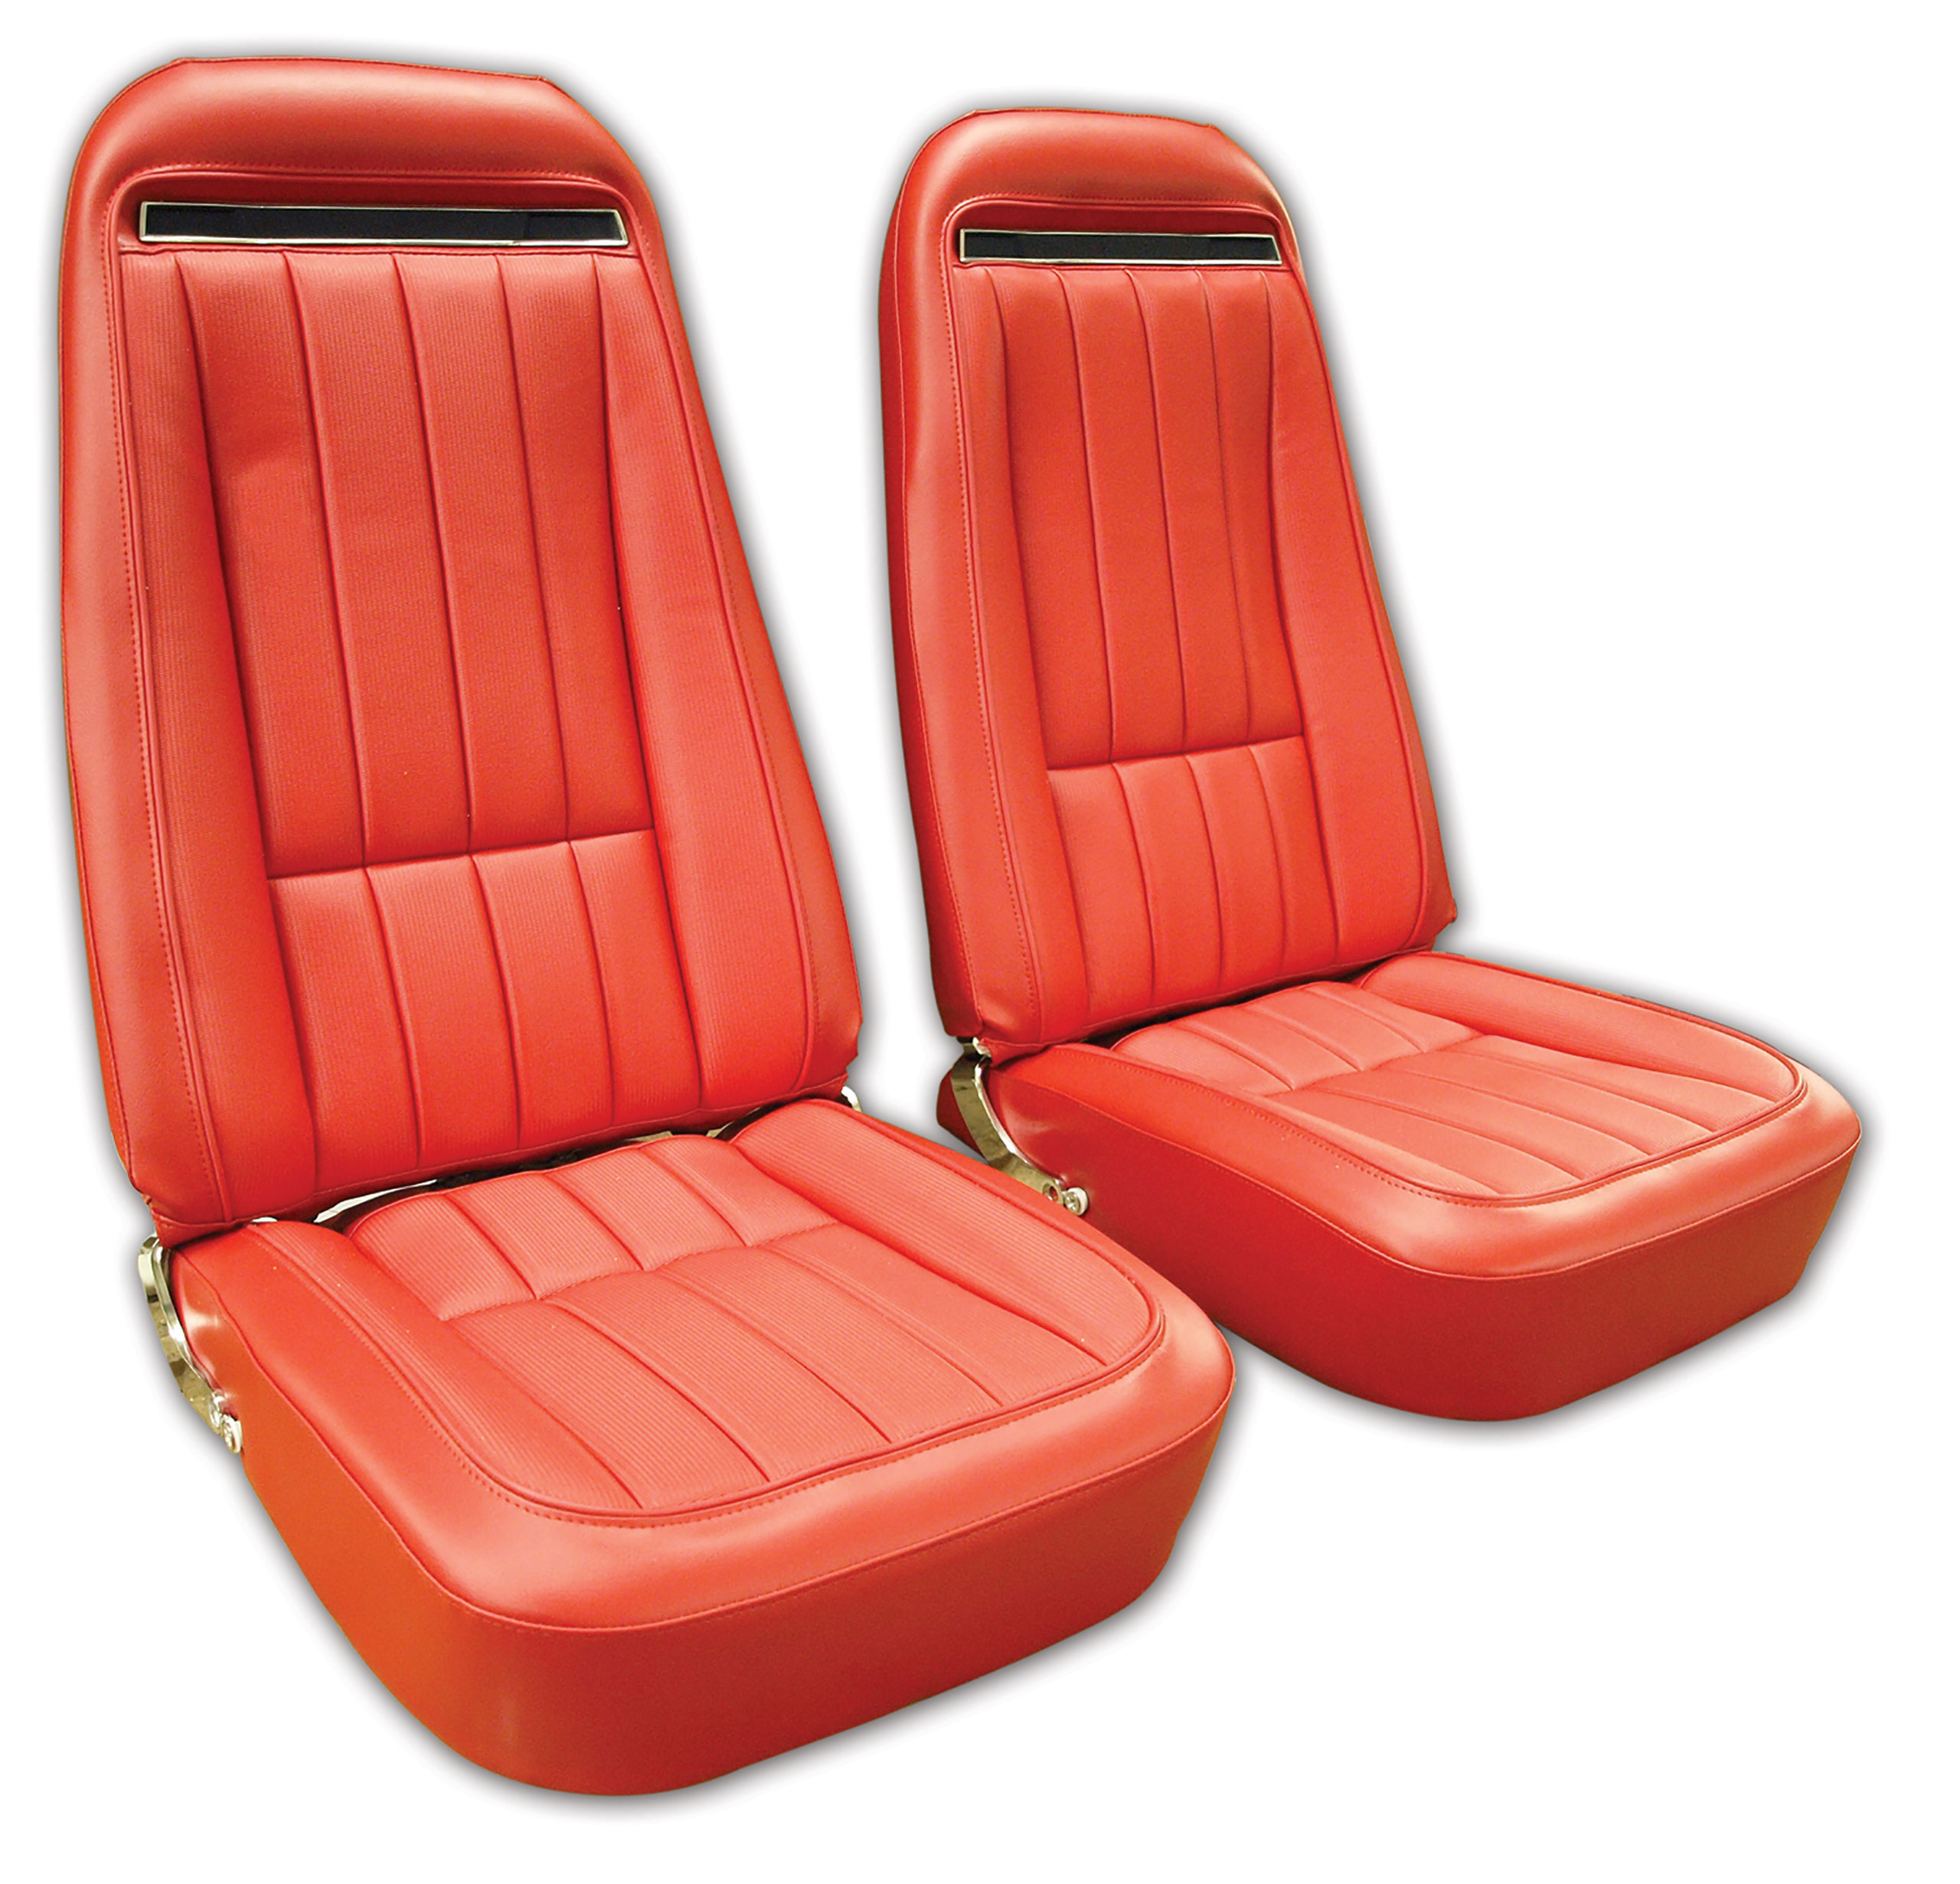 1972 Corvette C3 "Leather-Like" Vinyl Seat Covers- Red CA-421330 